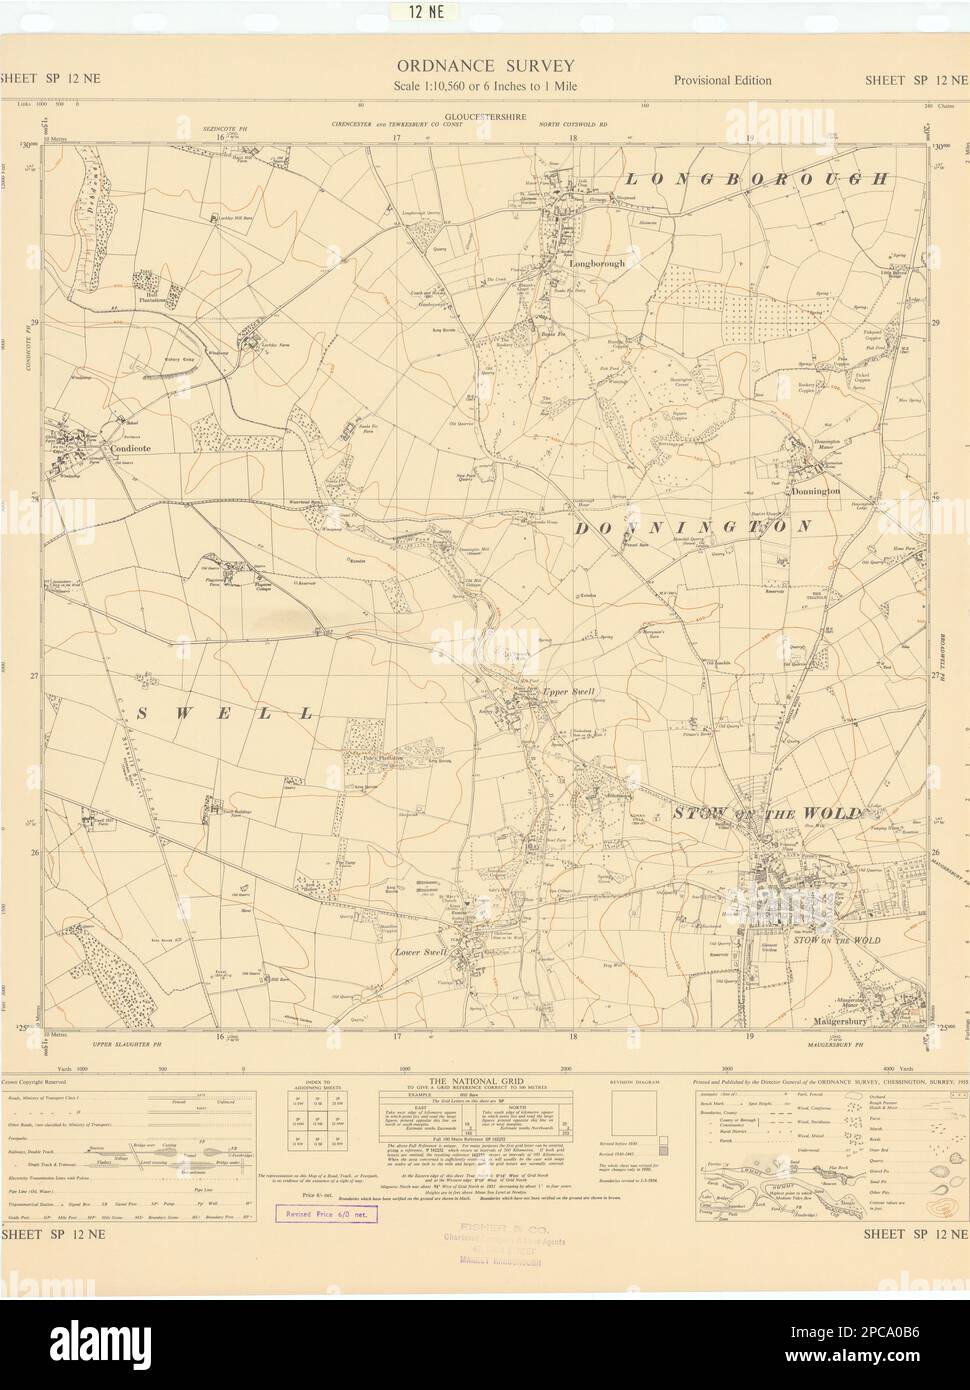 Ordnance Survey SP12NE Cotswolds Stow-on-the-Wold Longborough swell mapa 1955 Foto de stock